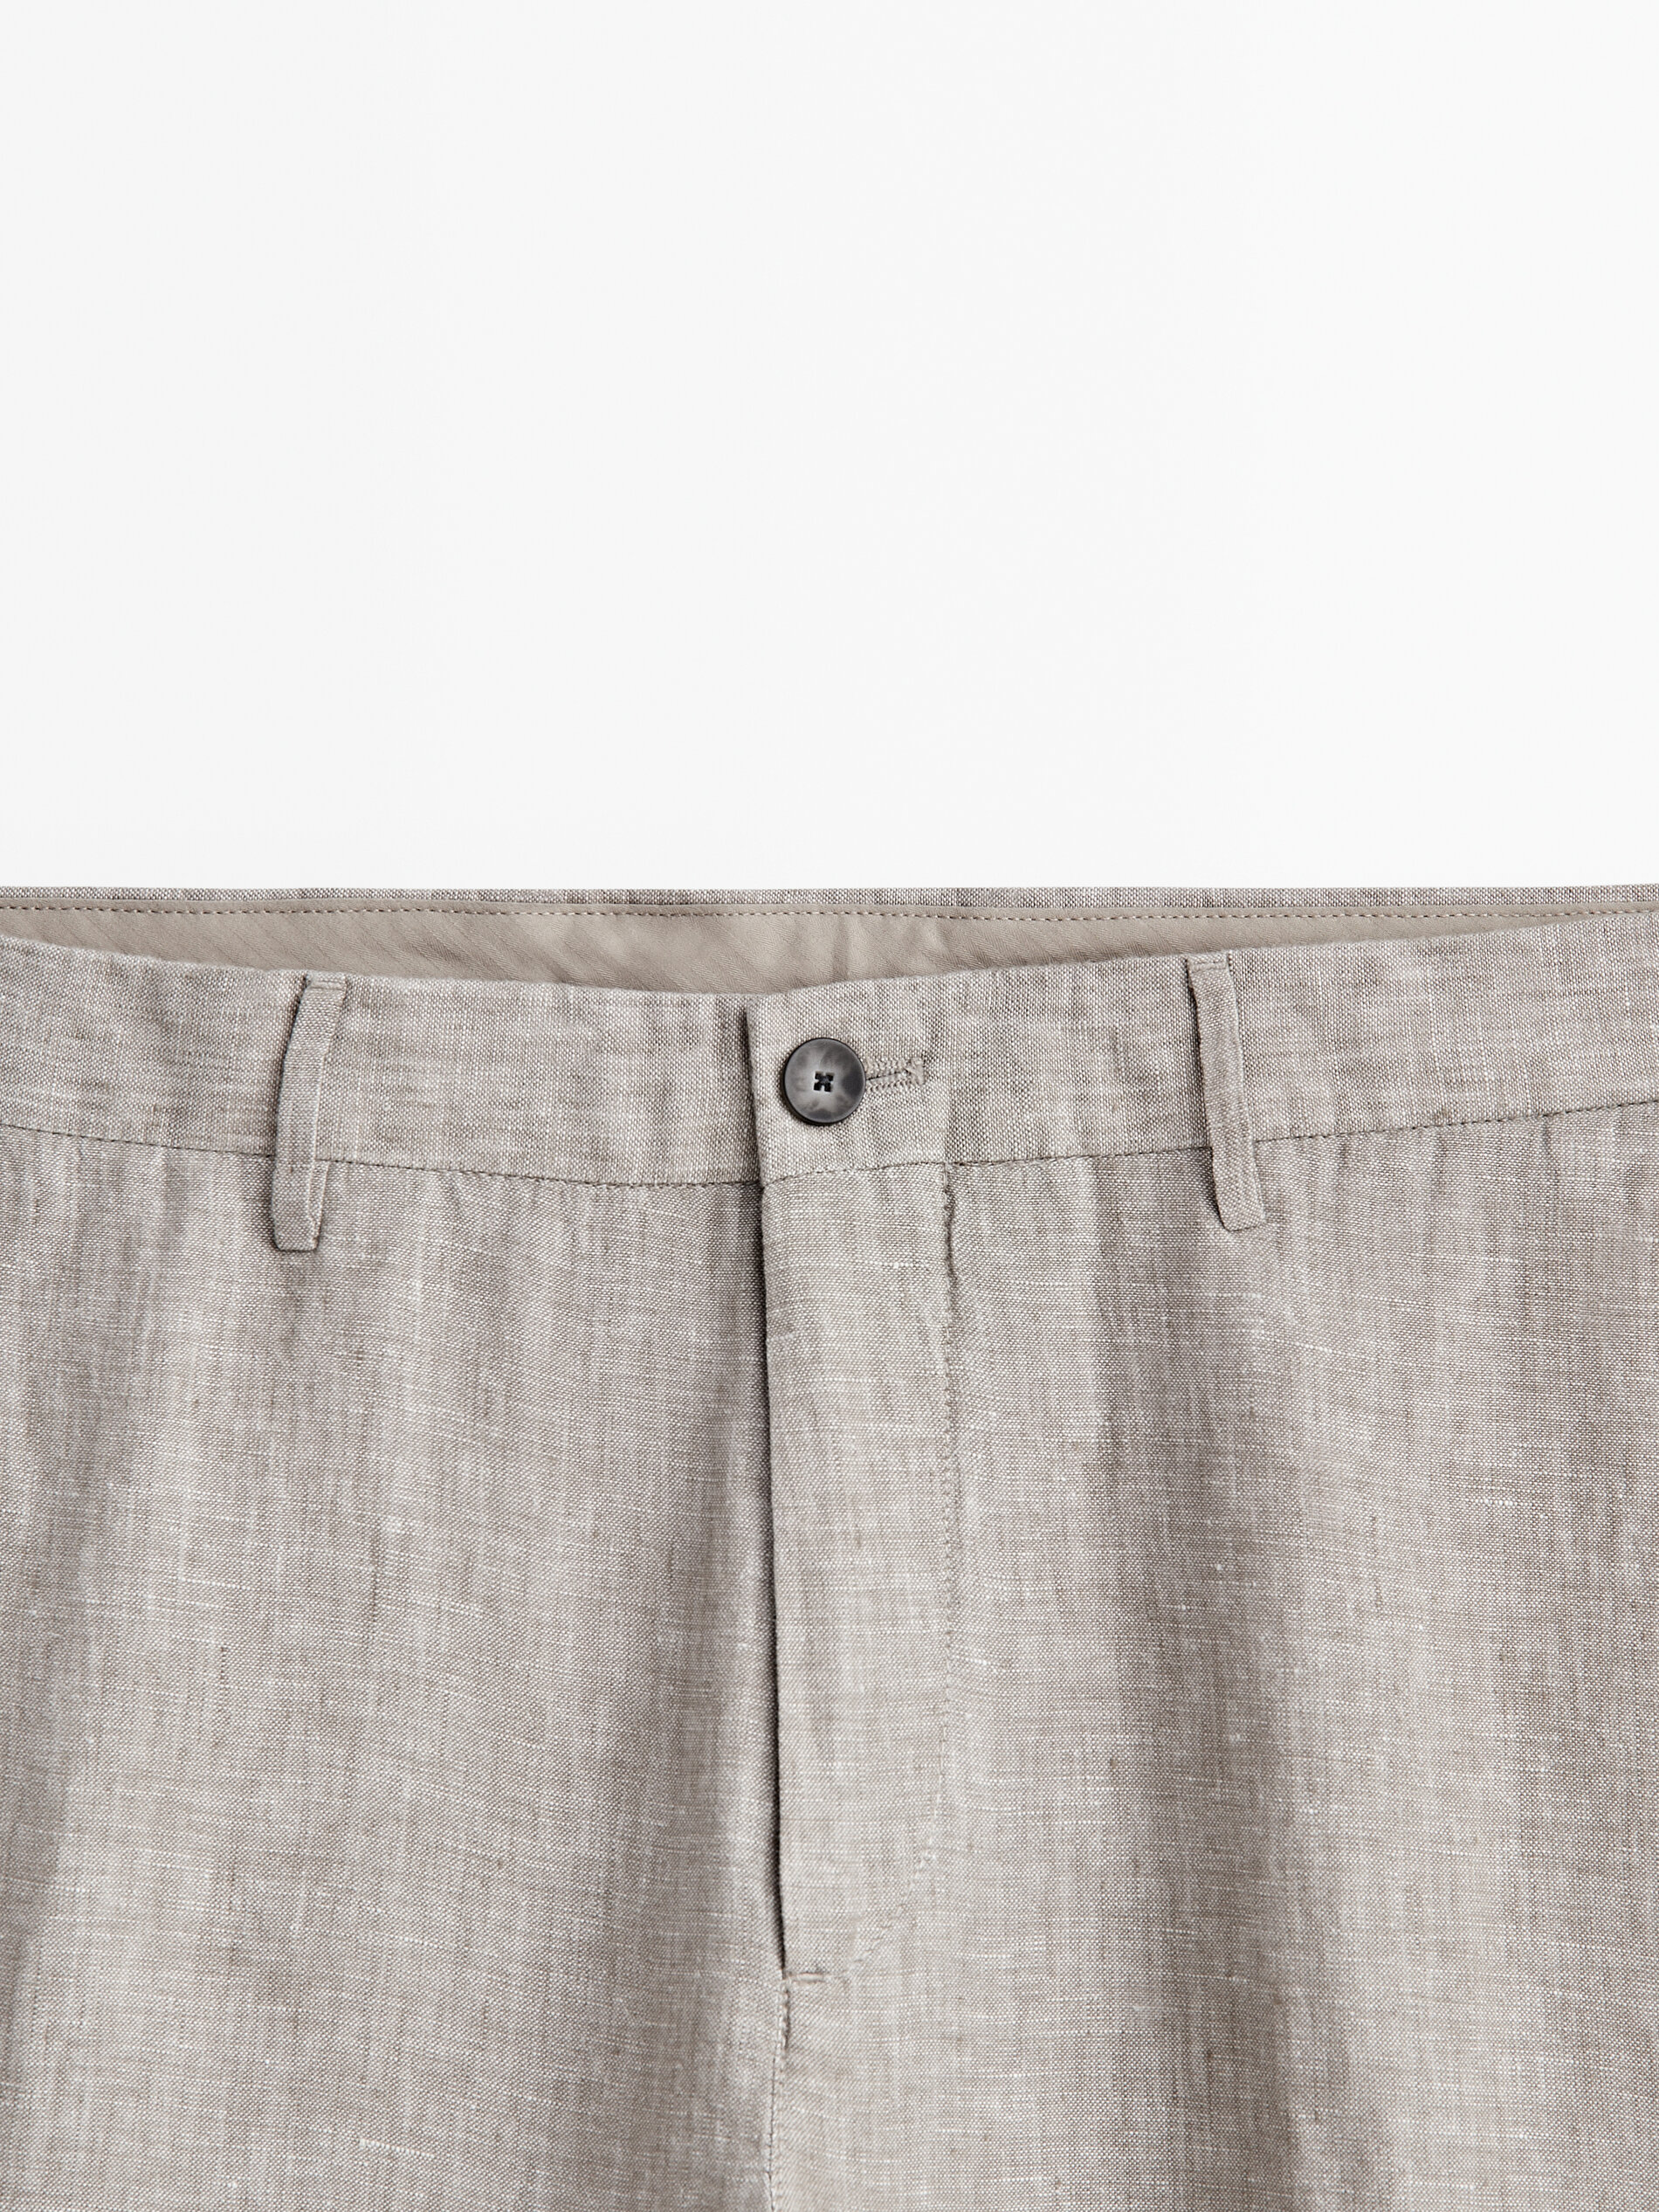 Men's Linen Natural (Khaki) Dress Pants - Island Importer